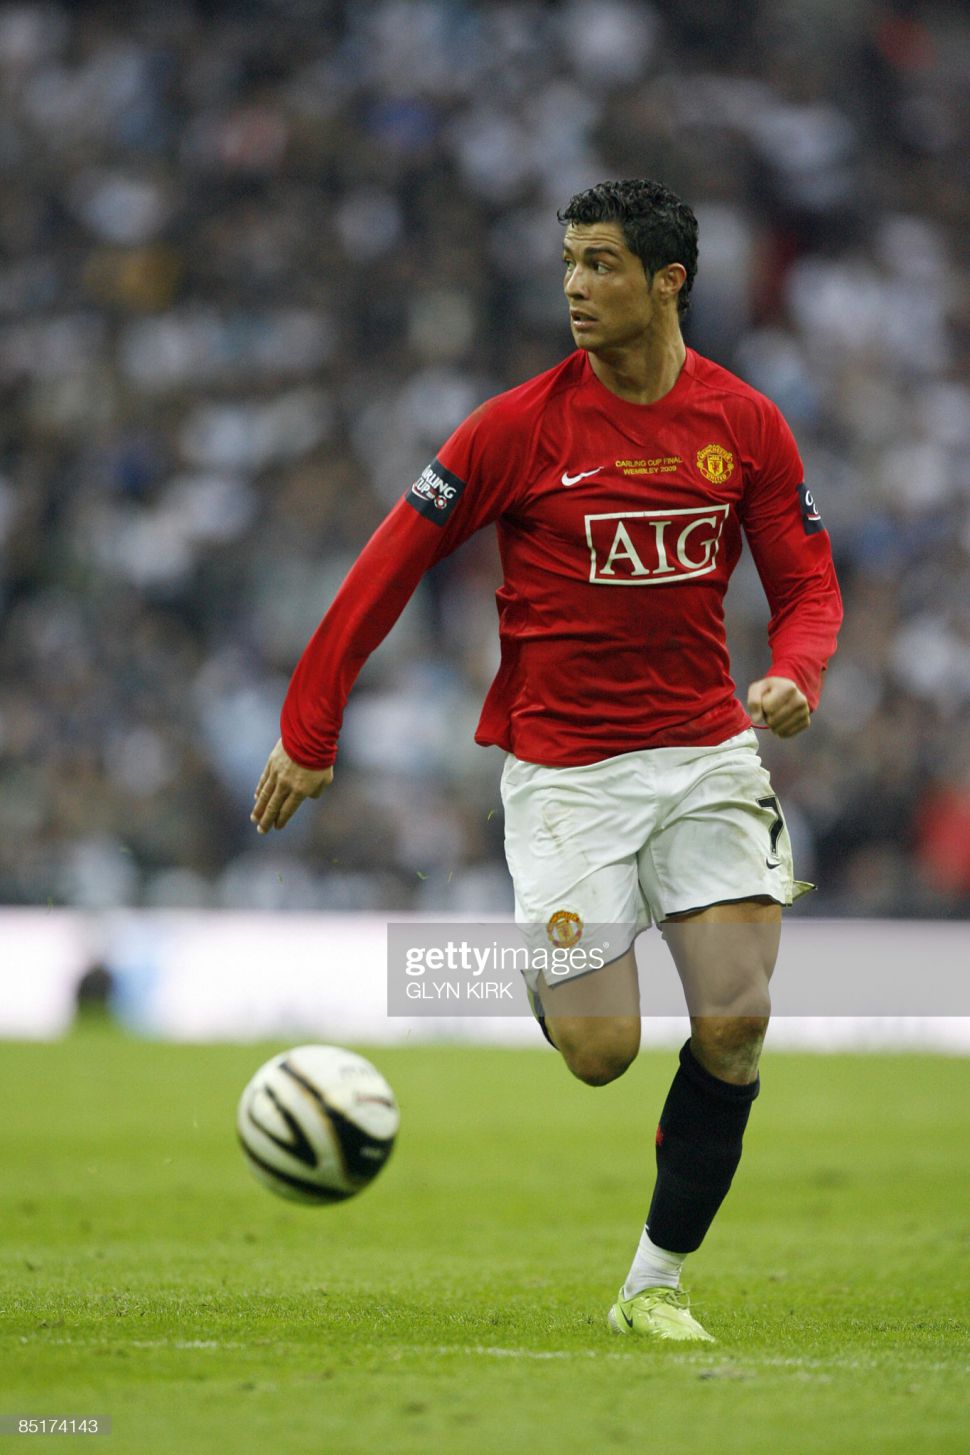 Áo Ronaldo 7 Manchester United League Cup Final 2009 home shirt 2008